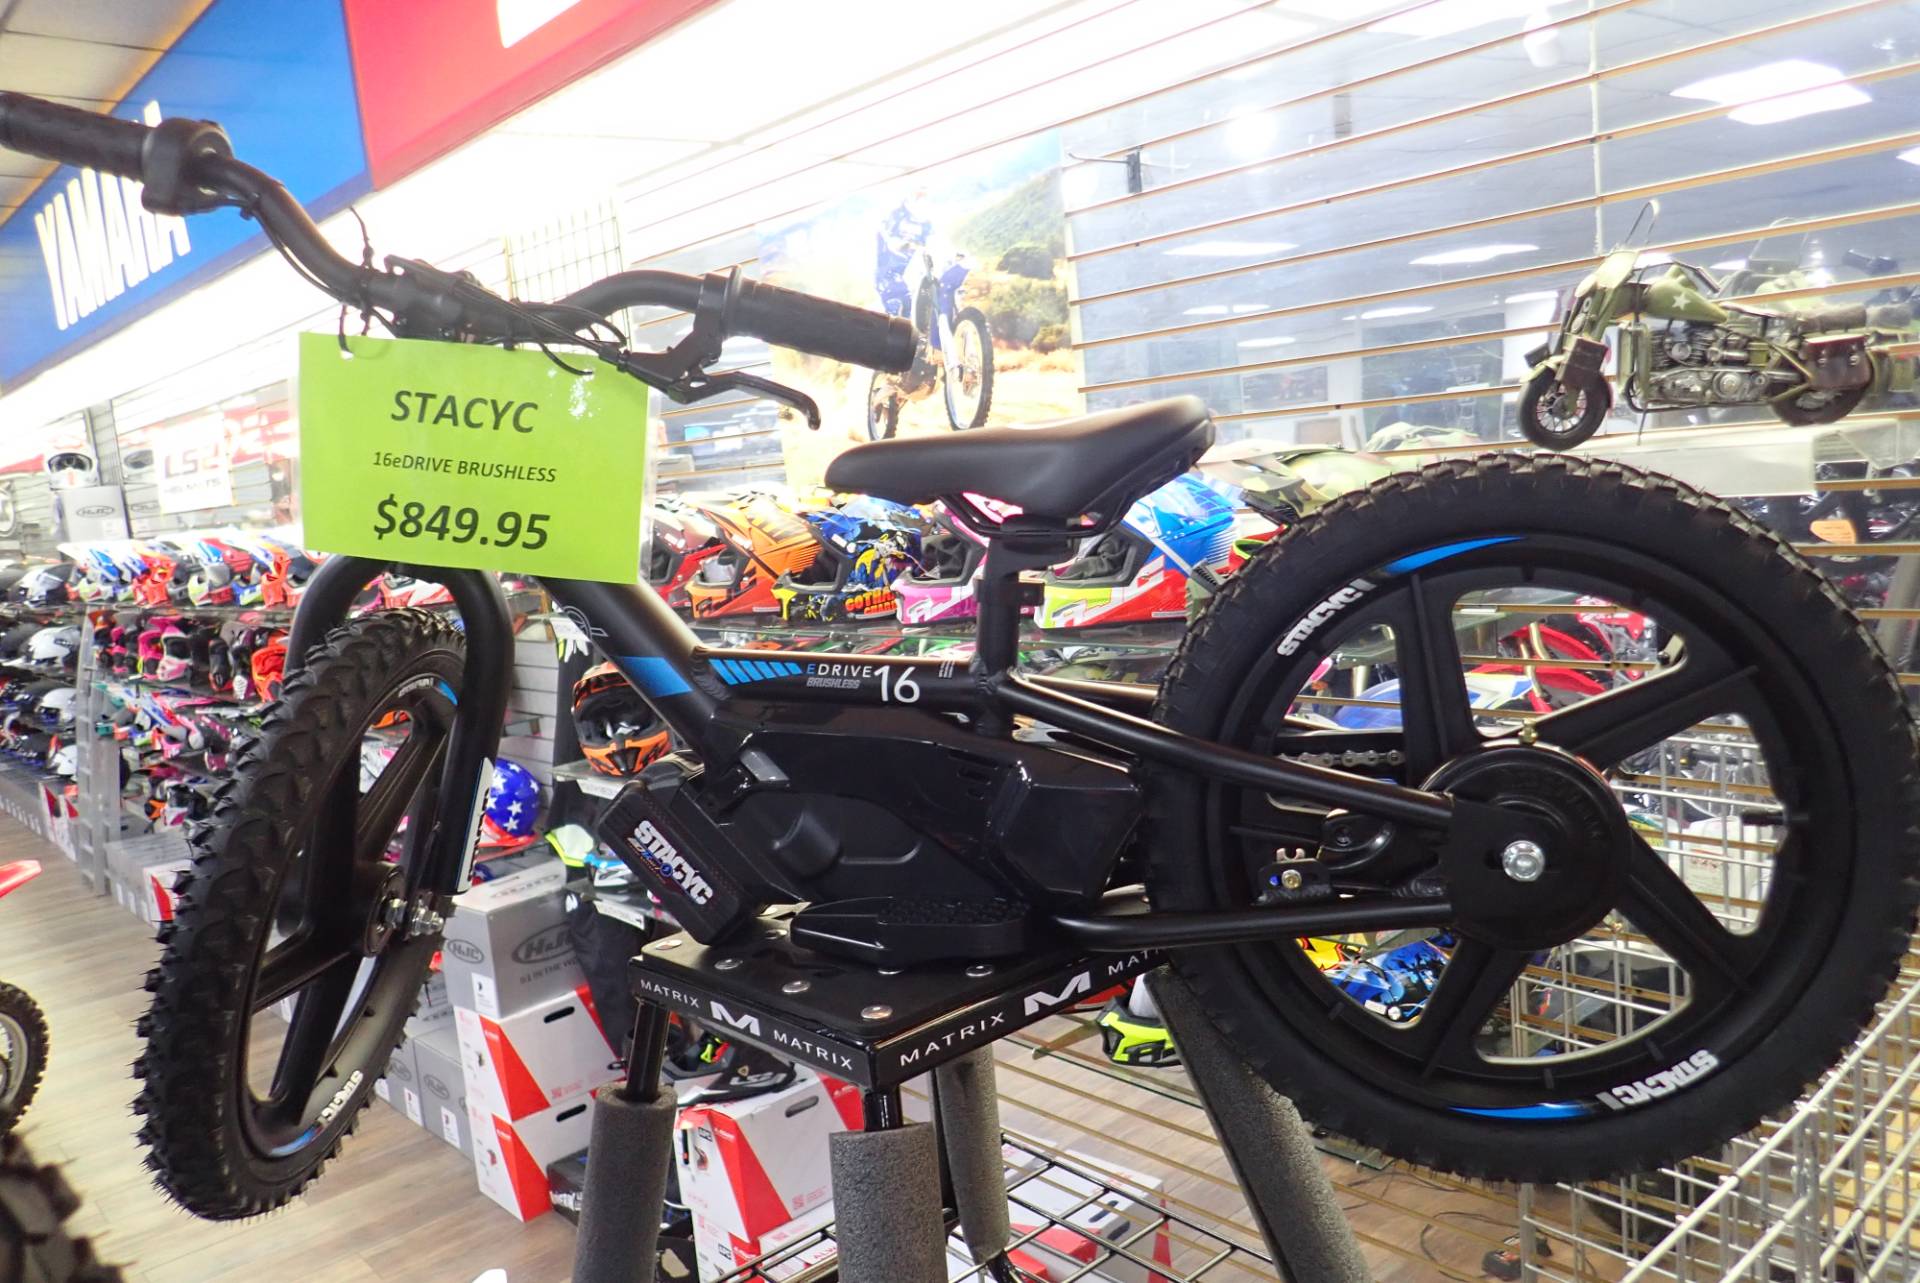 used stacyc bike for sale